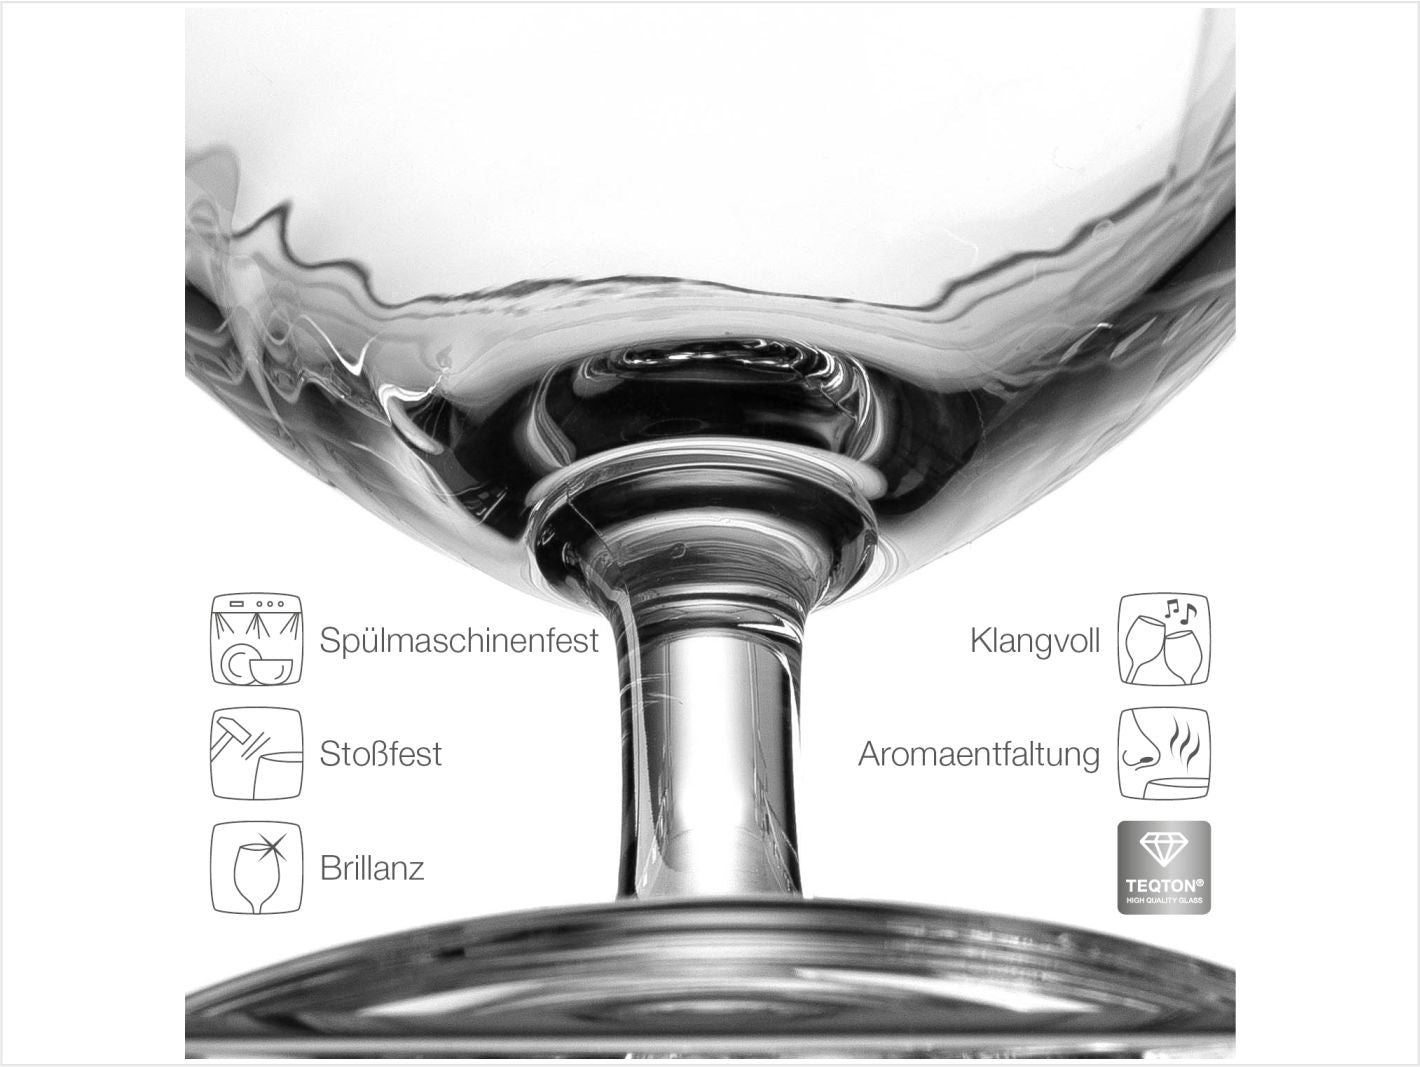 Wasserglas DAILY 370ml